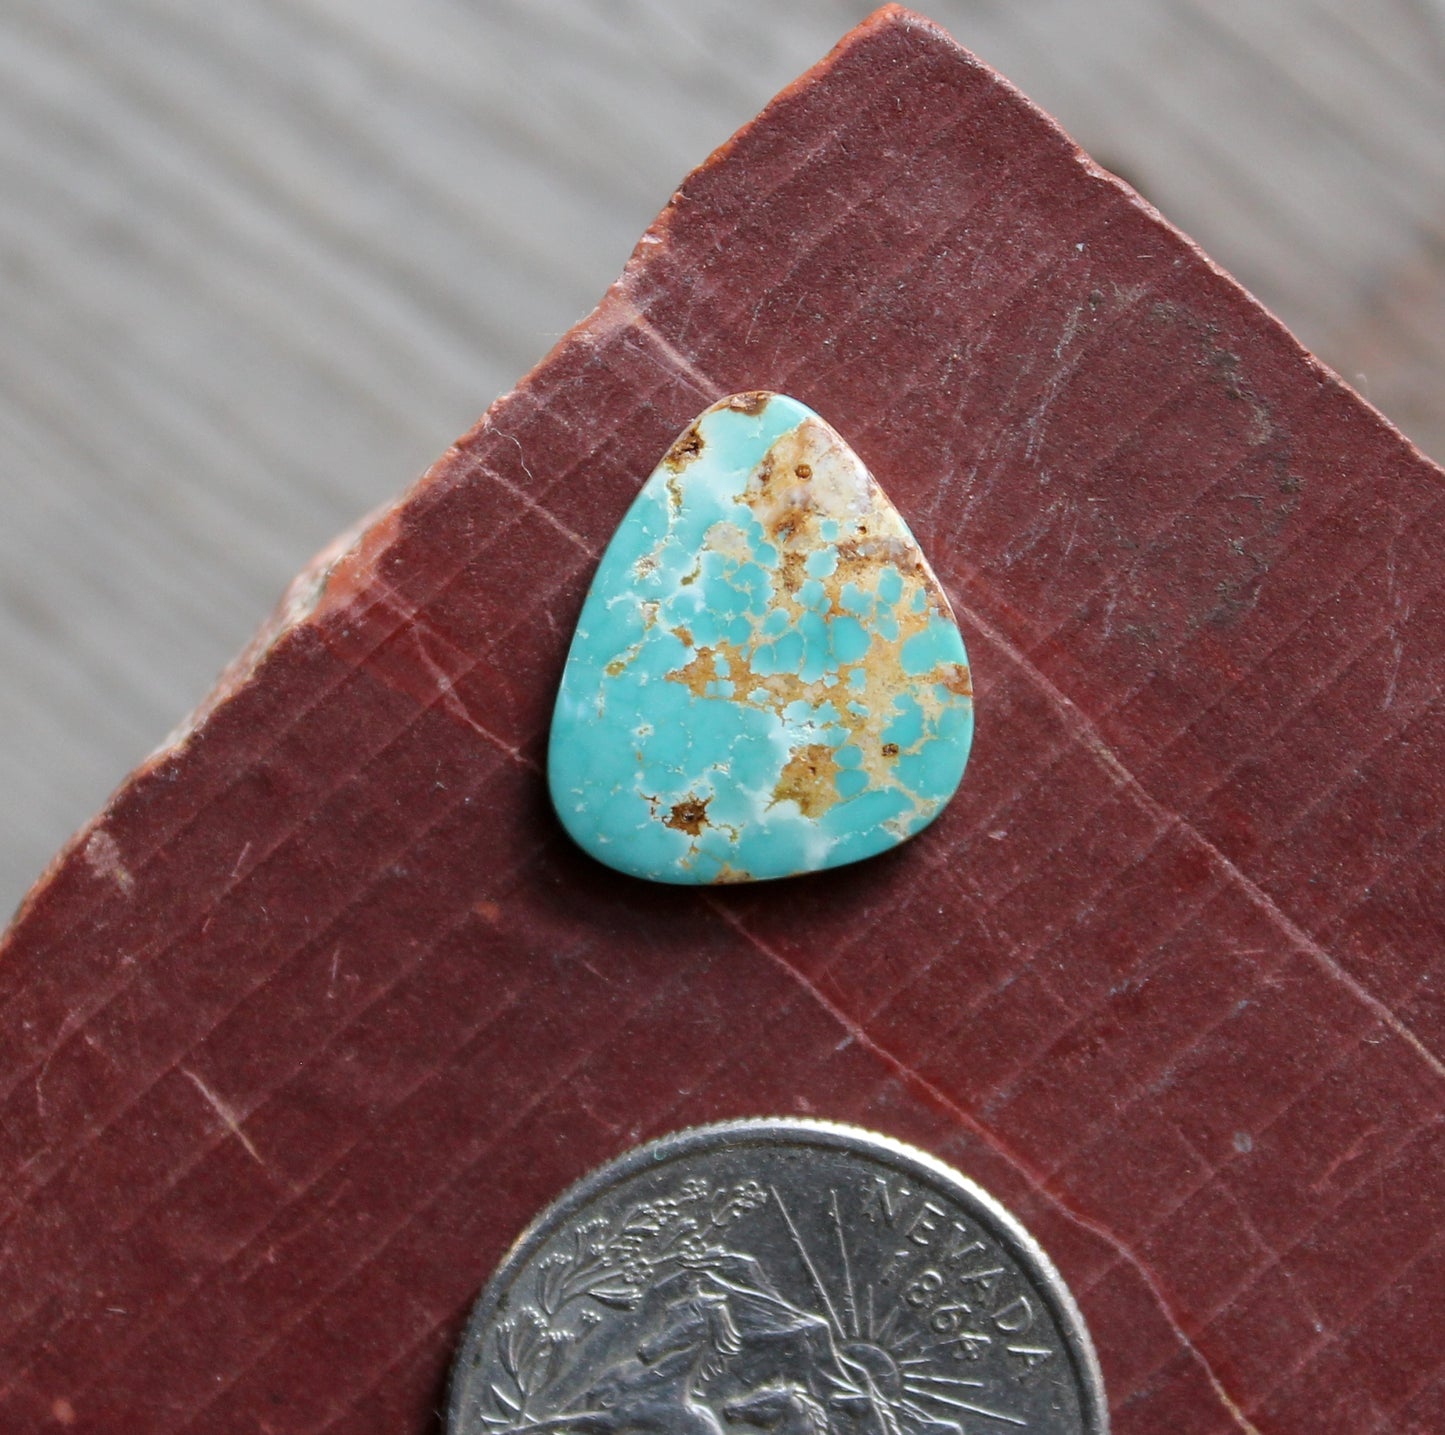 5 carat blue Stone Mountain Turquoise cabochon